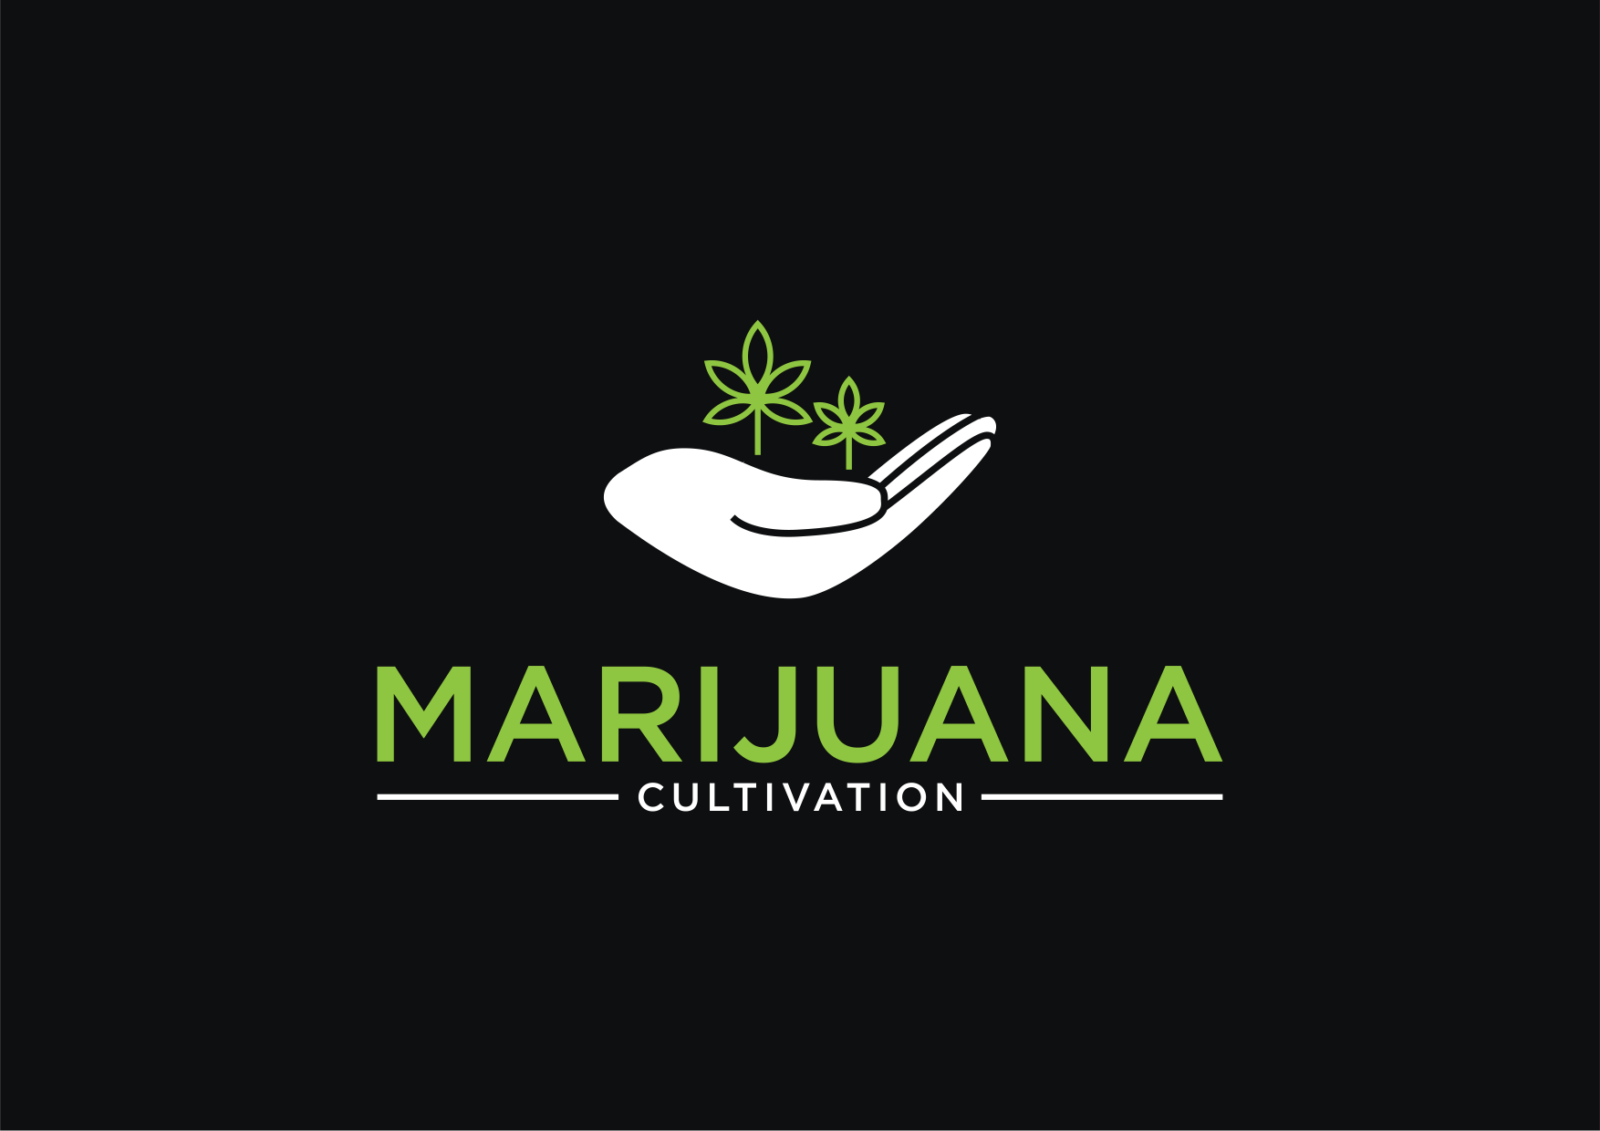 MarijuanaCultivation.com